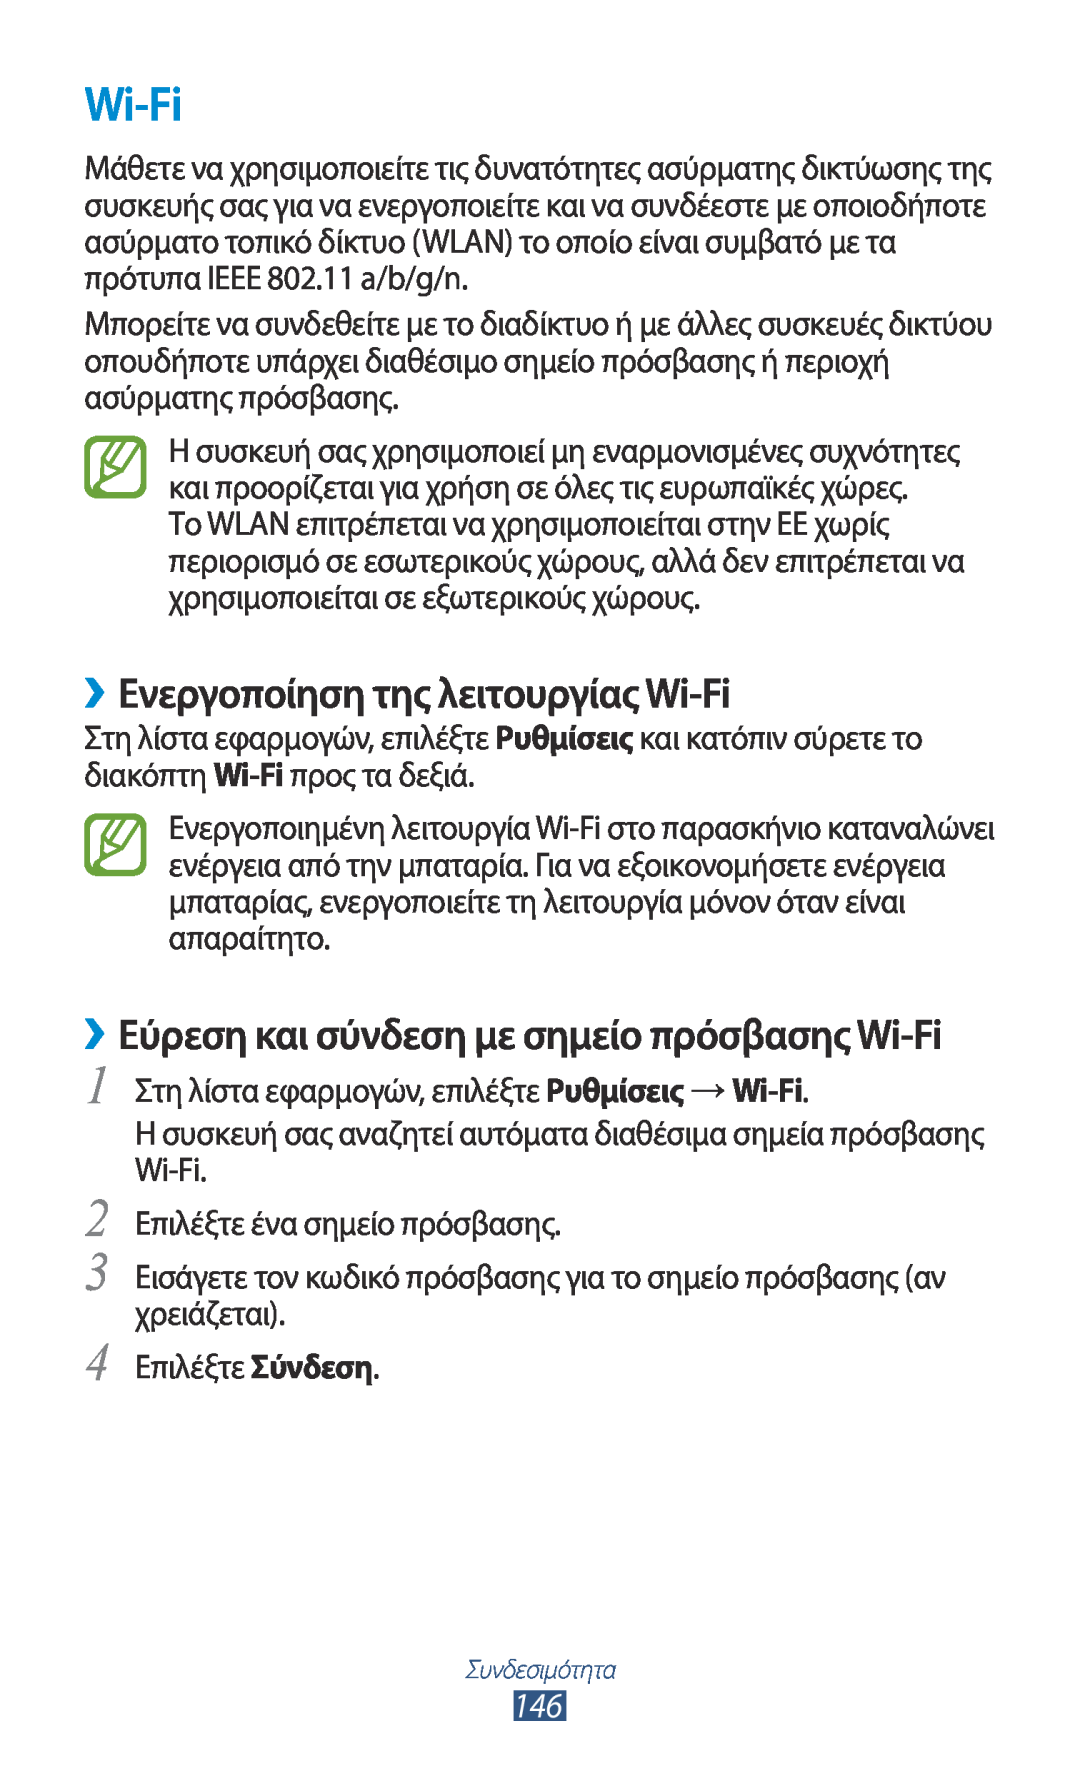 Samsung GT-N7000RWAVGR manual ››Ενεργοποίηση της λειτουργίας Wi-Fi, ››Εύρεση και σύνδεση με σημείο πρόσβασης Wi-Fi 